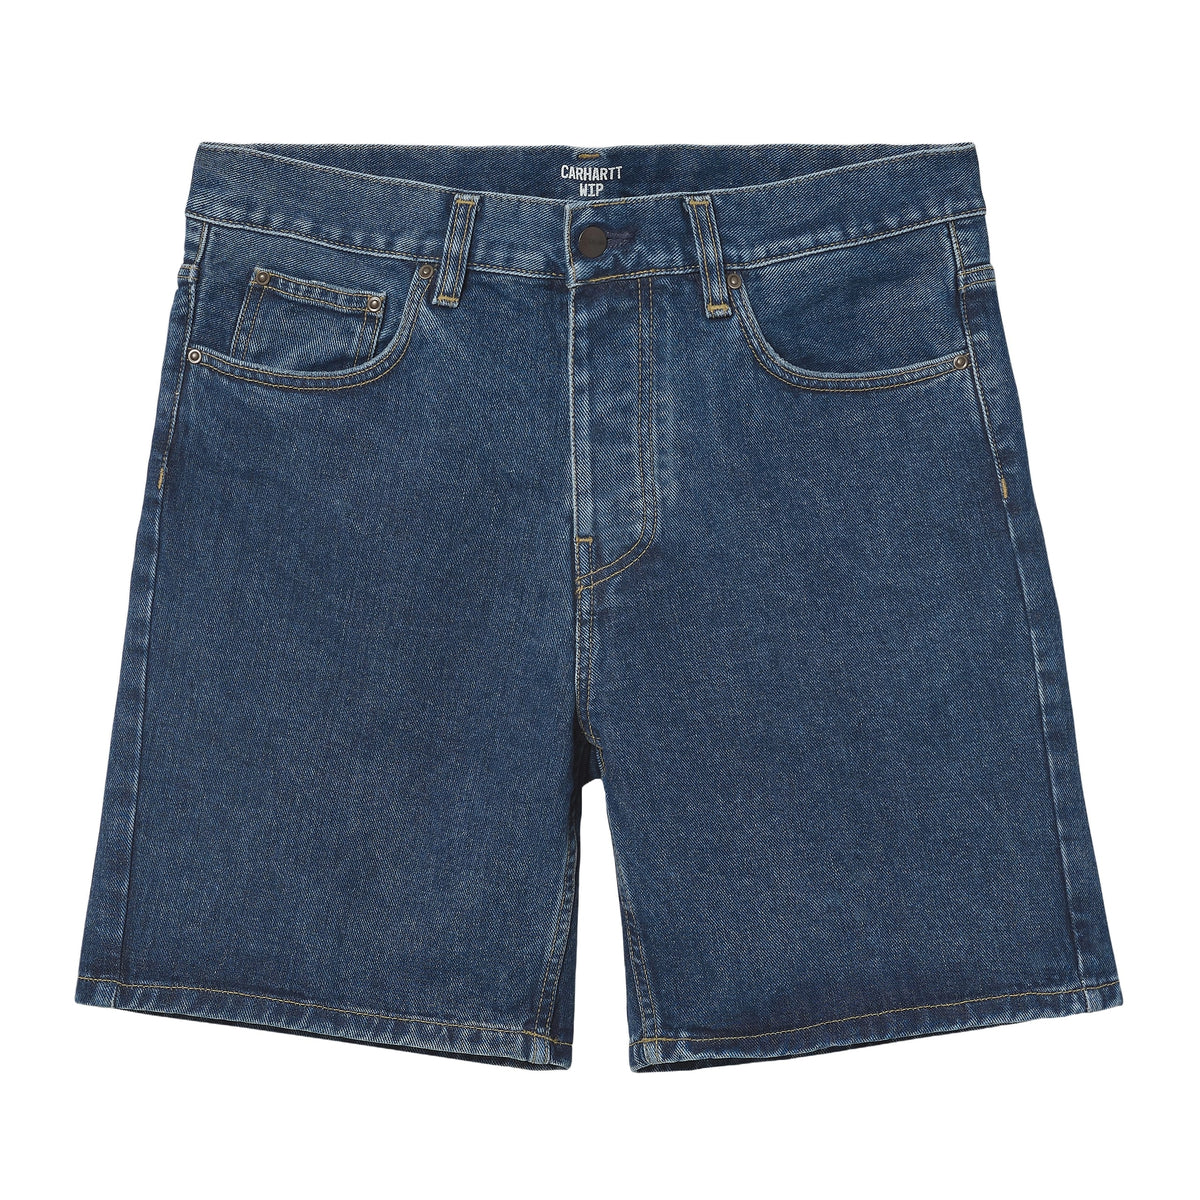 Carhartt Wip Men's jeans shorts Newel